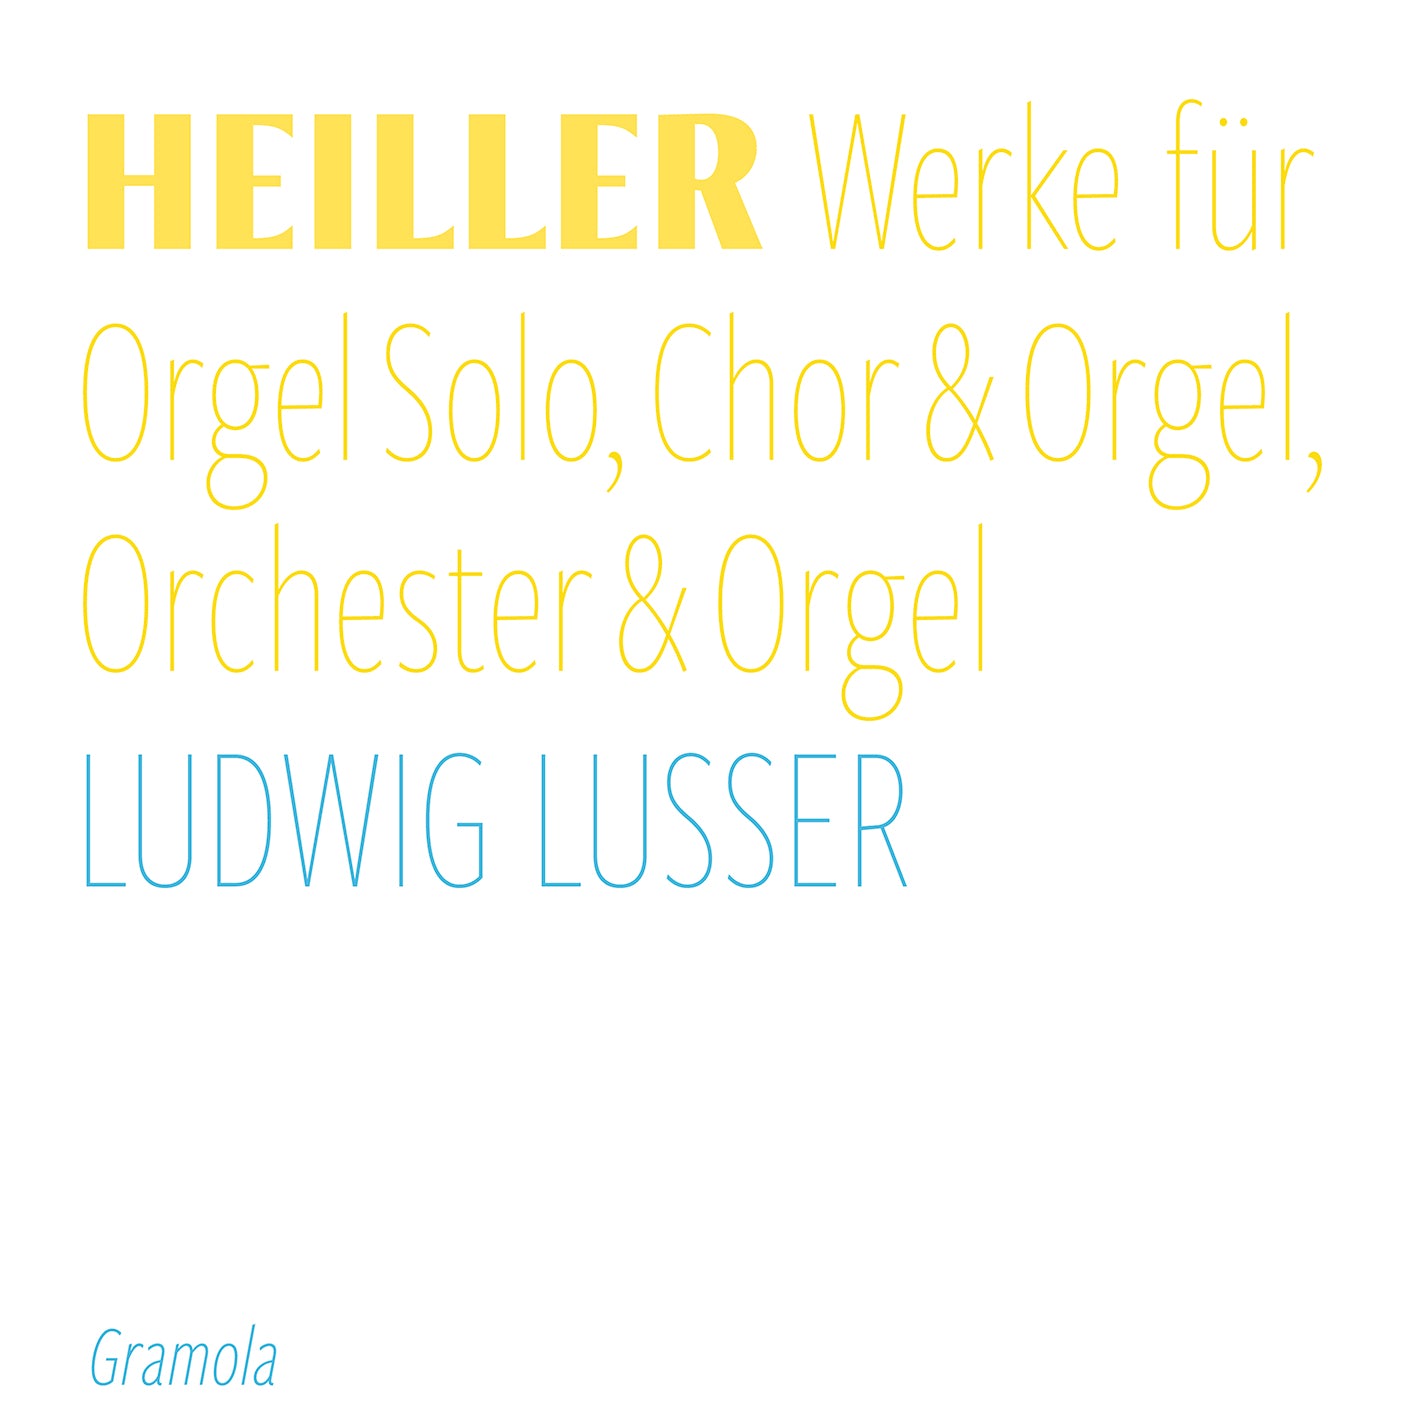 Heiller: Complete Recordings for Organ Solo, Choir & Organ, & Orchestra & Organ